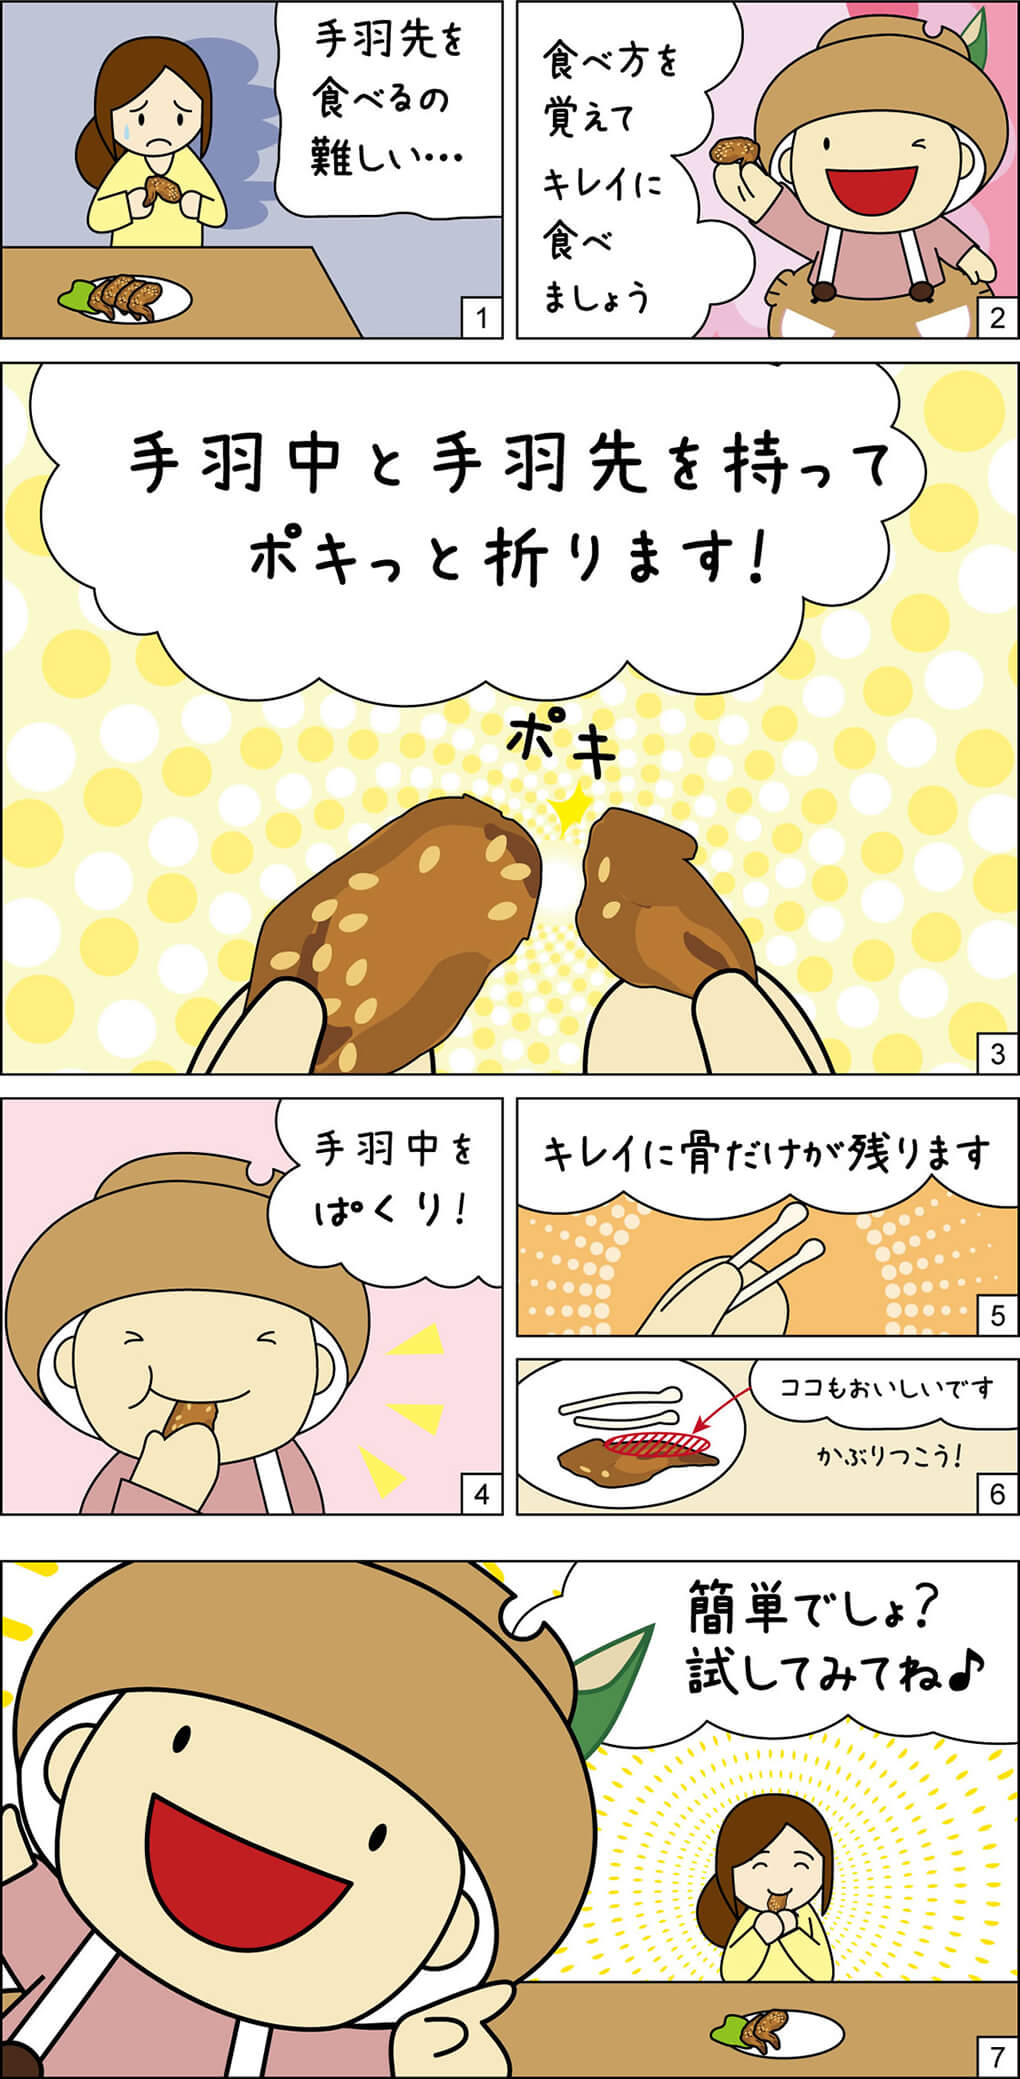 How to eat “Tebasaki ”